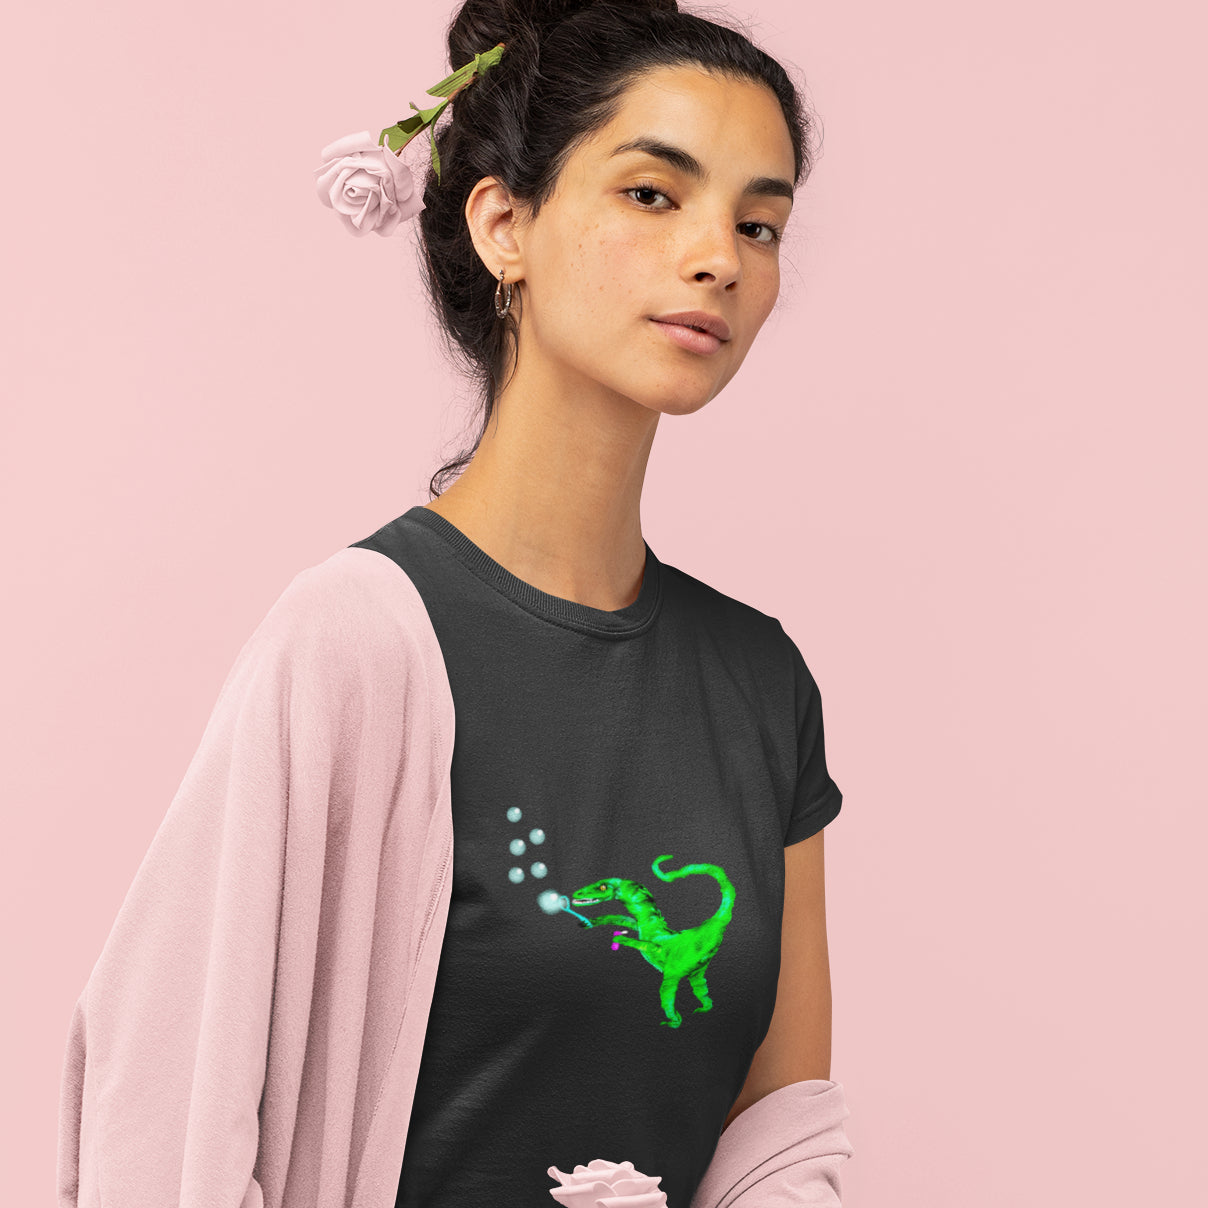 Dinosaur Velociraptor | Women's 100% Organic Cotton T Shirt worn by a woman